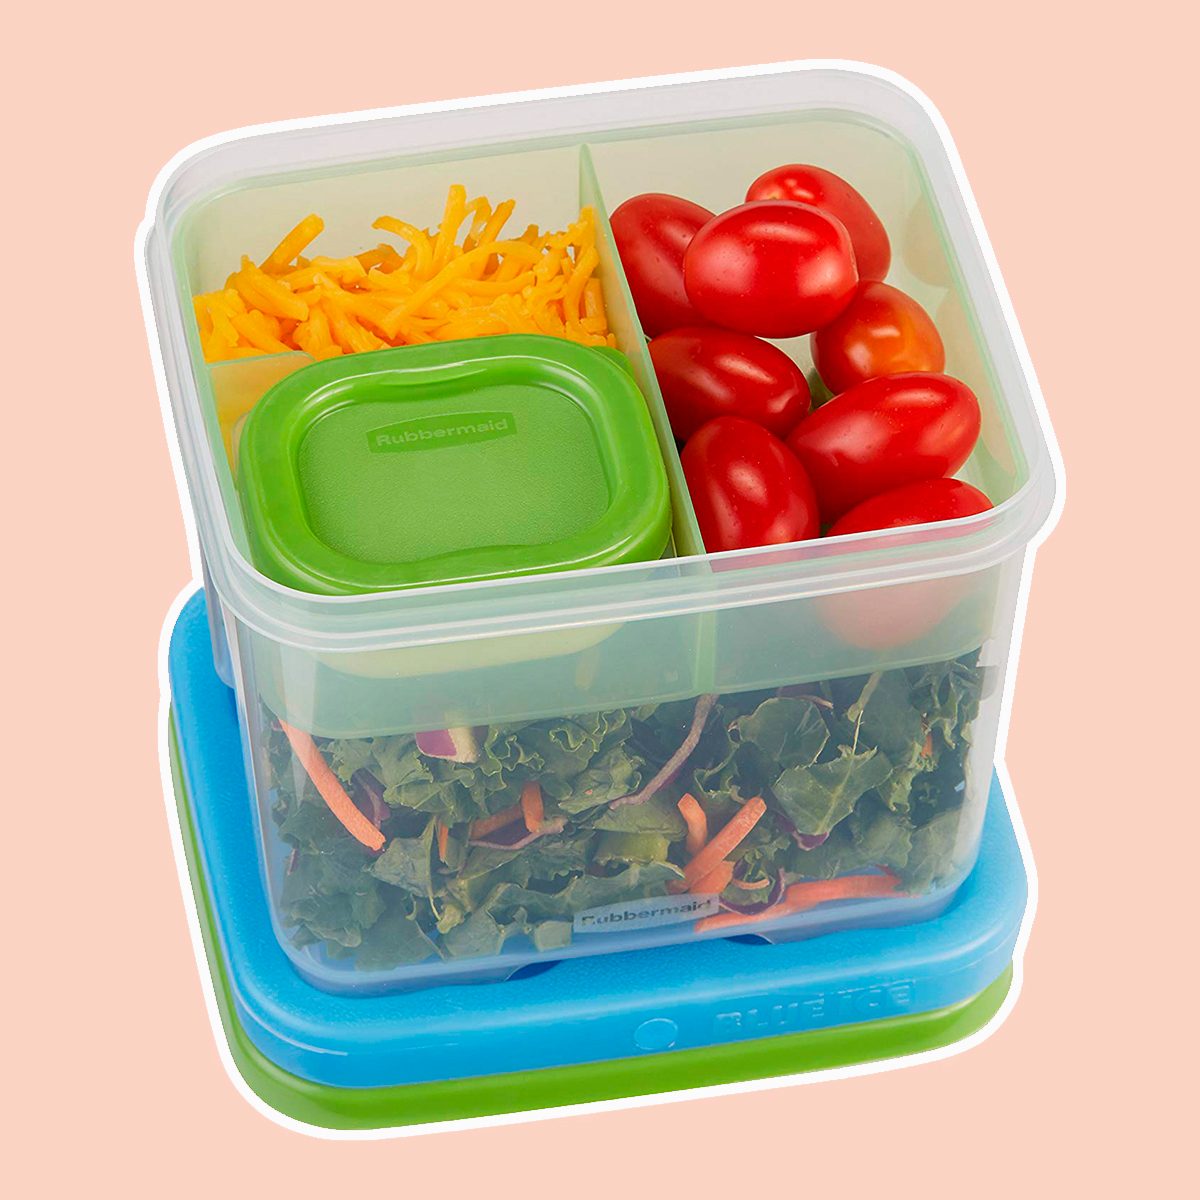 https://www.tasteofhome.com/wp-content/uploads/2020/03/Rubbermaid-LunchBlox-Salad-Kit.jpg?fit=700%2C700